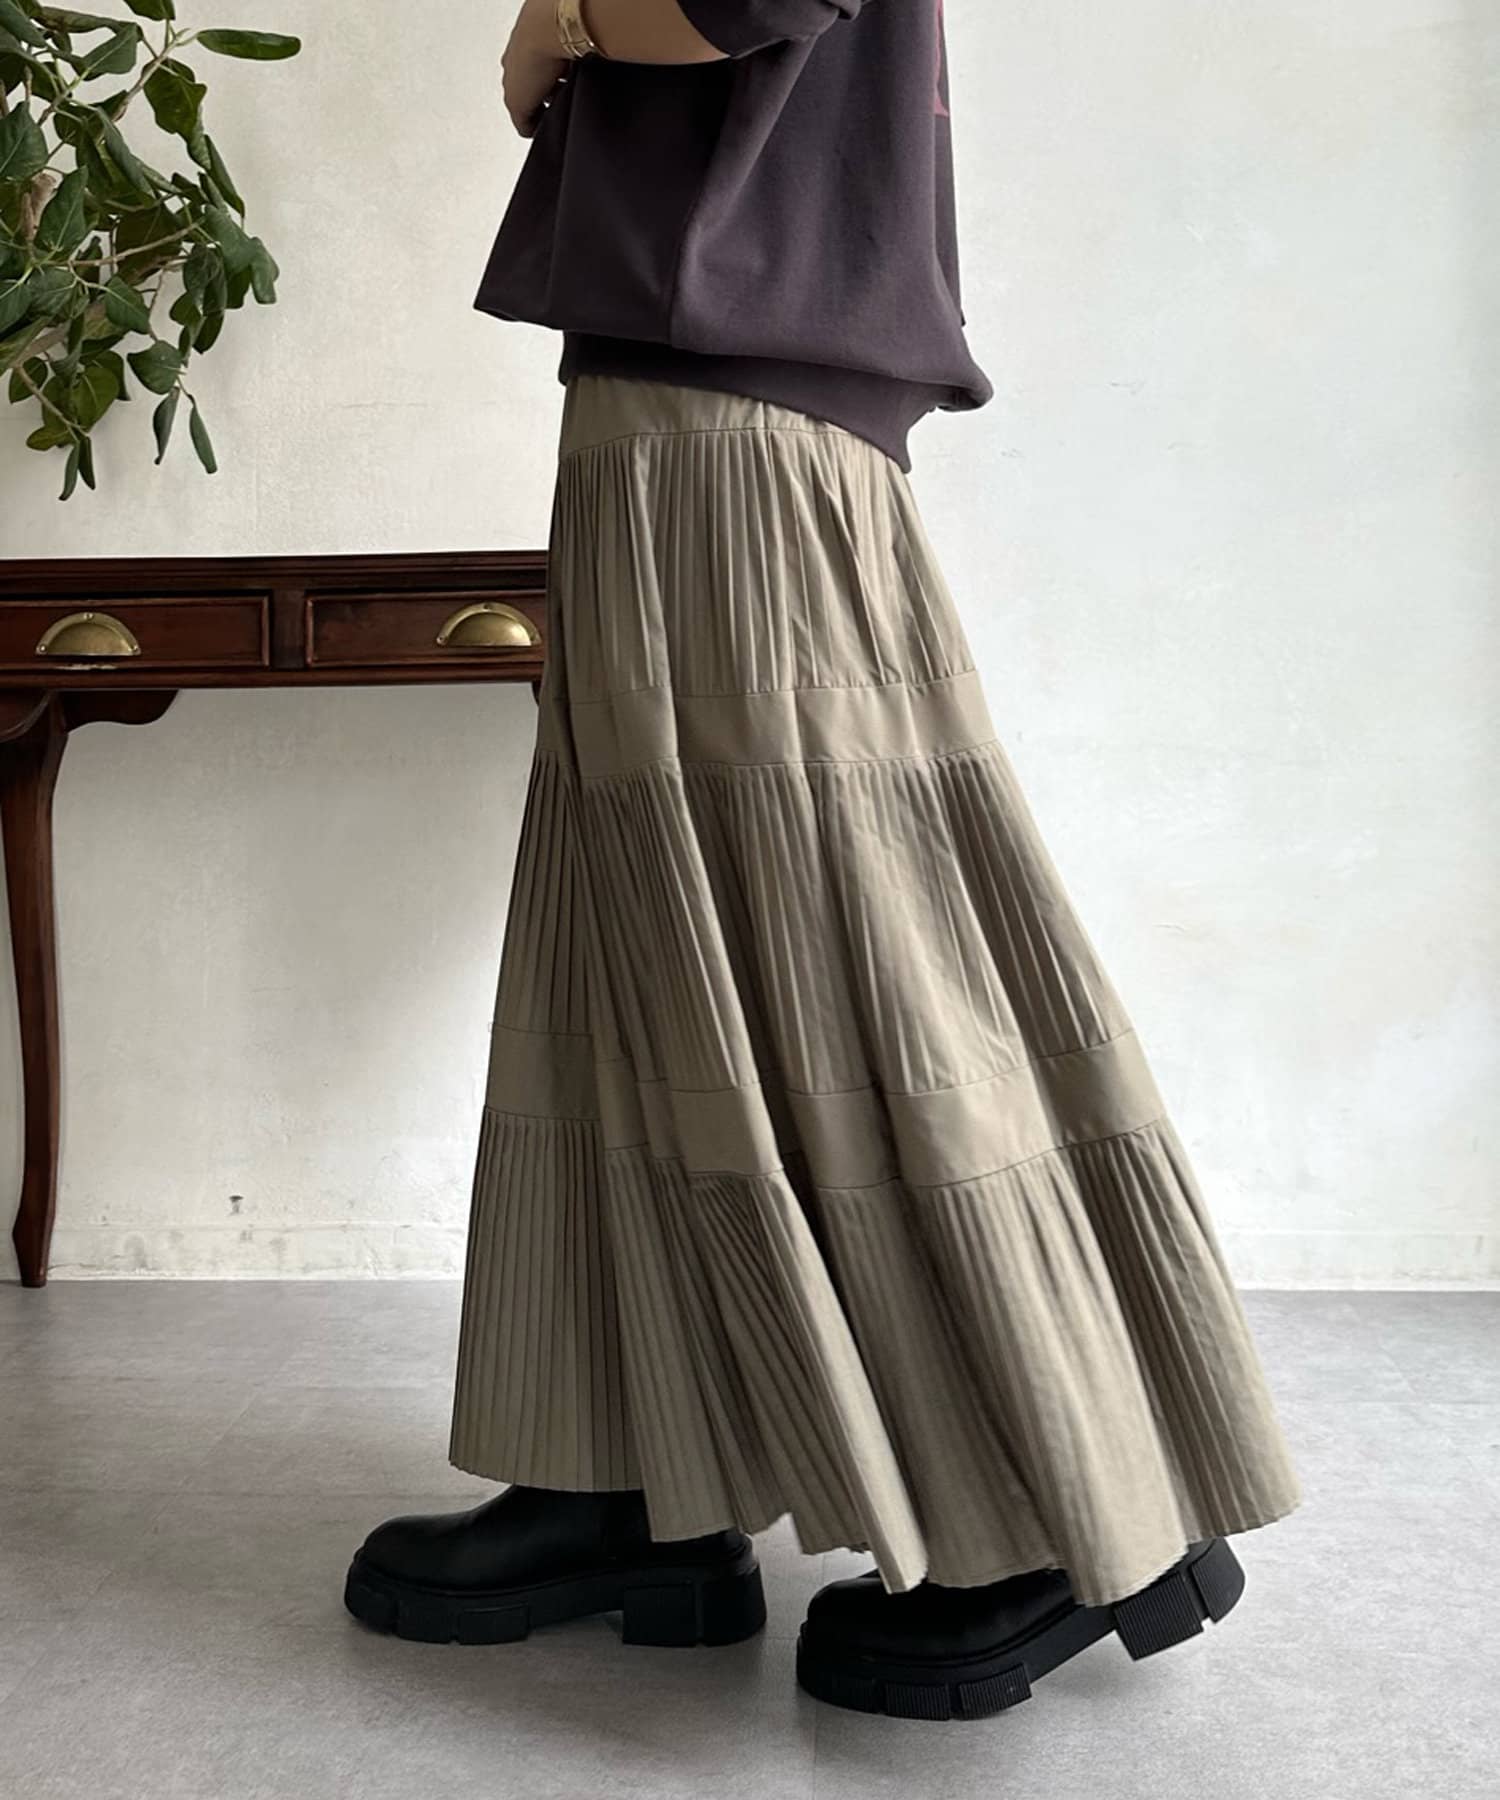 DOUDOU(ドゥドゥ)ひざ丈ロングスカート 柄ミモレ白黒ベージュフレア人気完売スカート